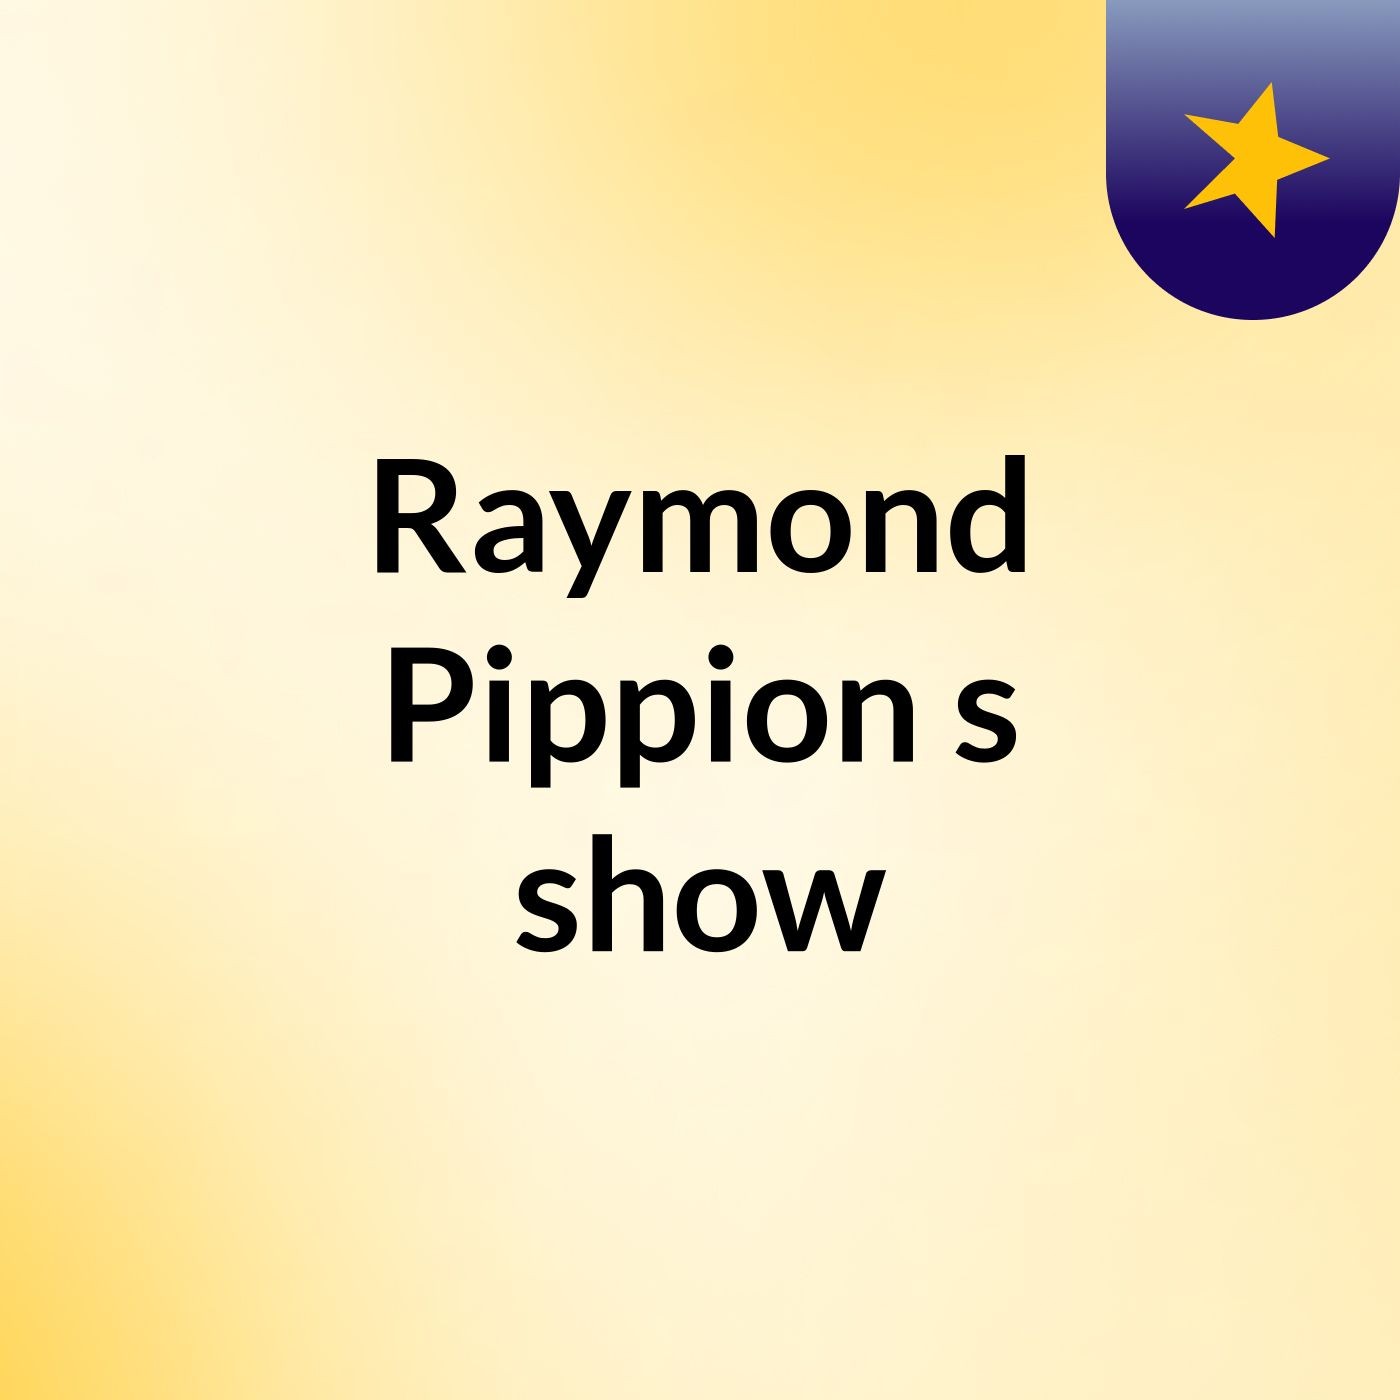 Episode 2 - Raymond Pippion's show